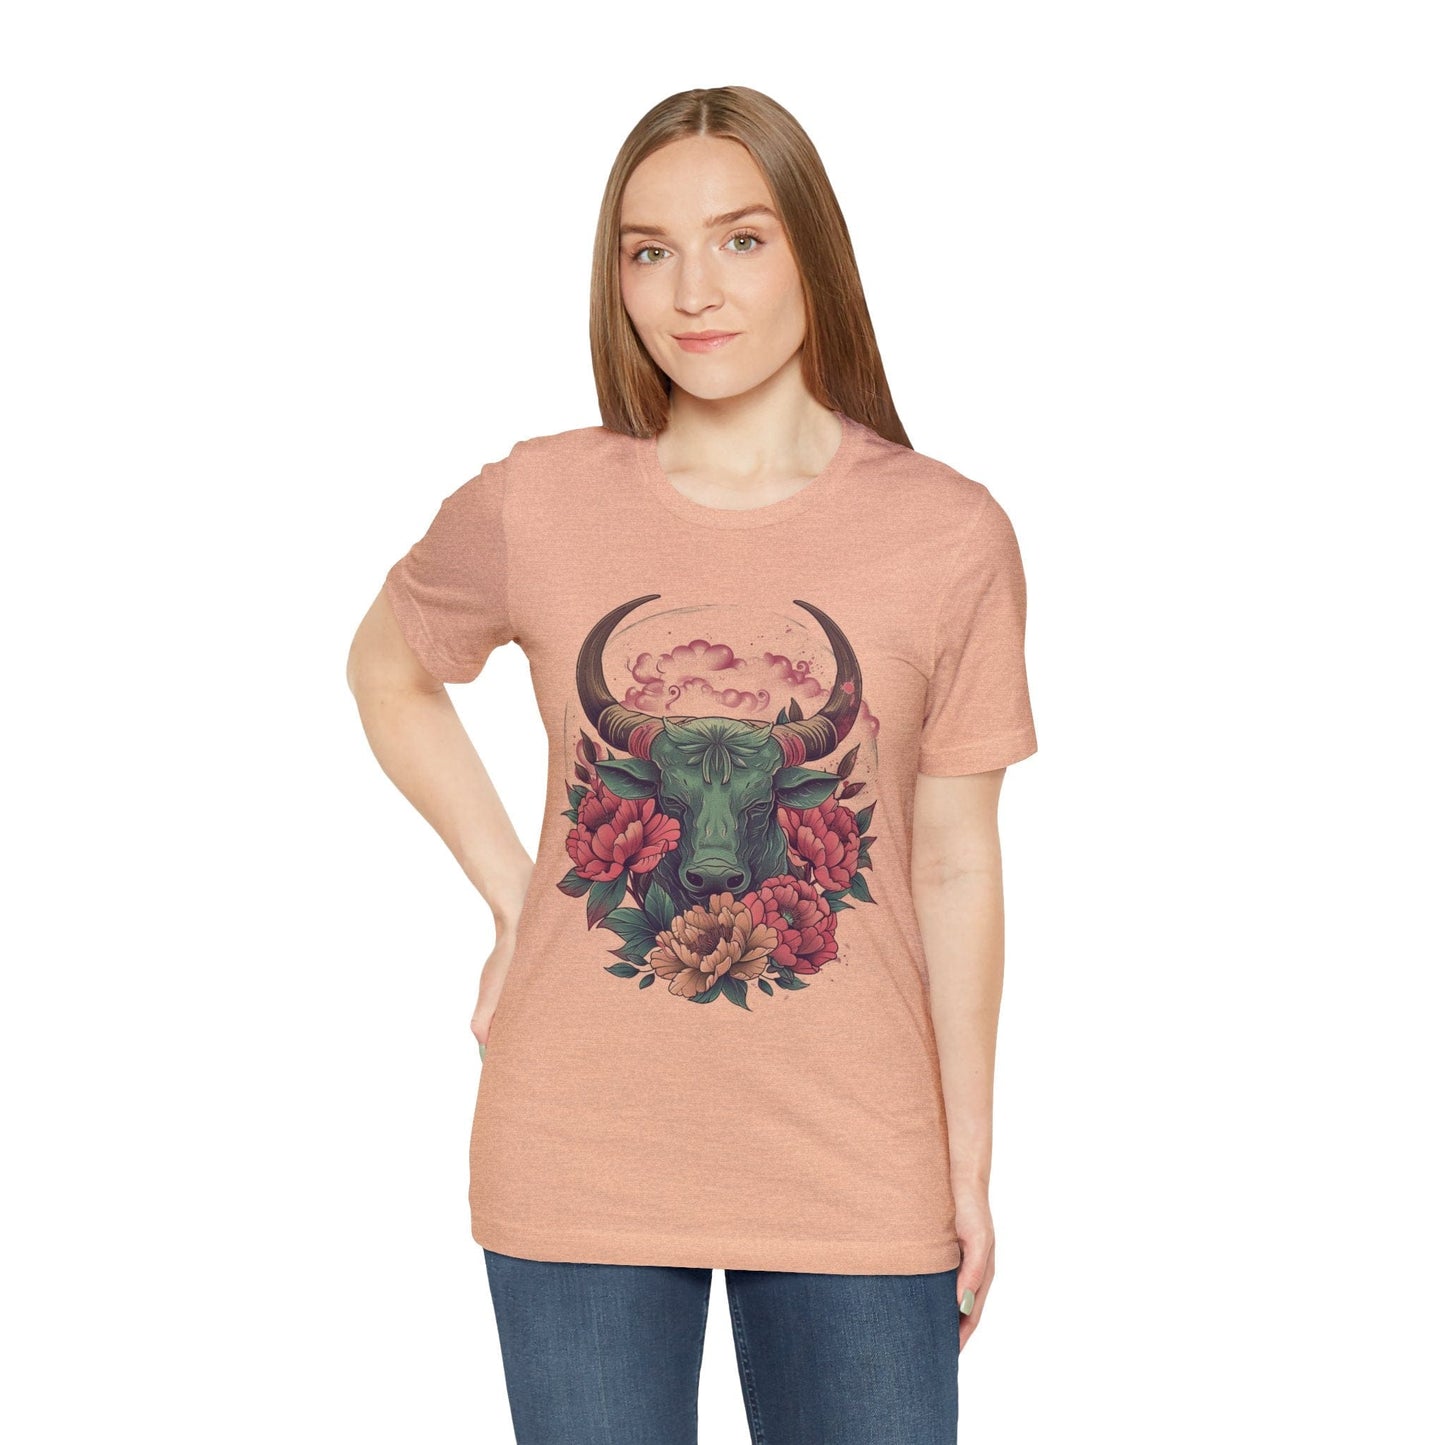 T-Shirt Taurus Floral Majesty T-Shirt